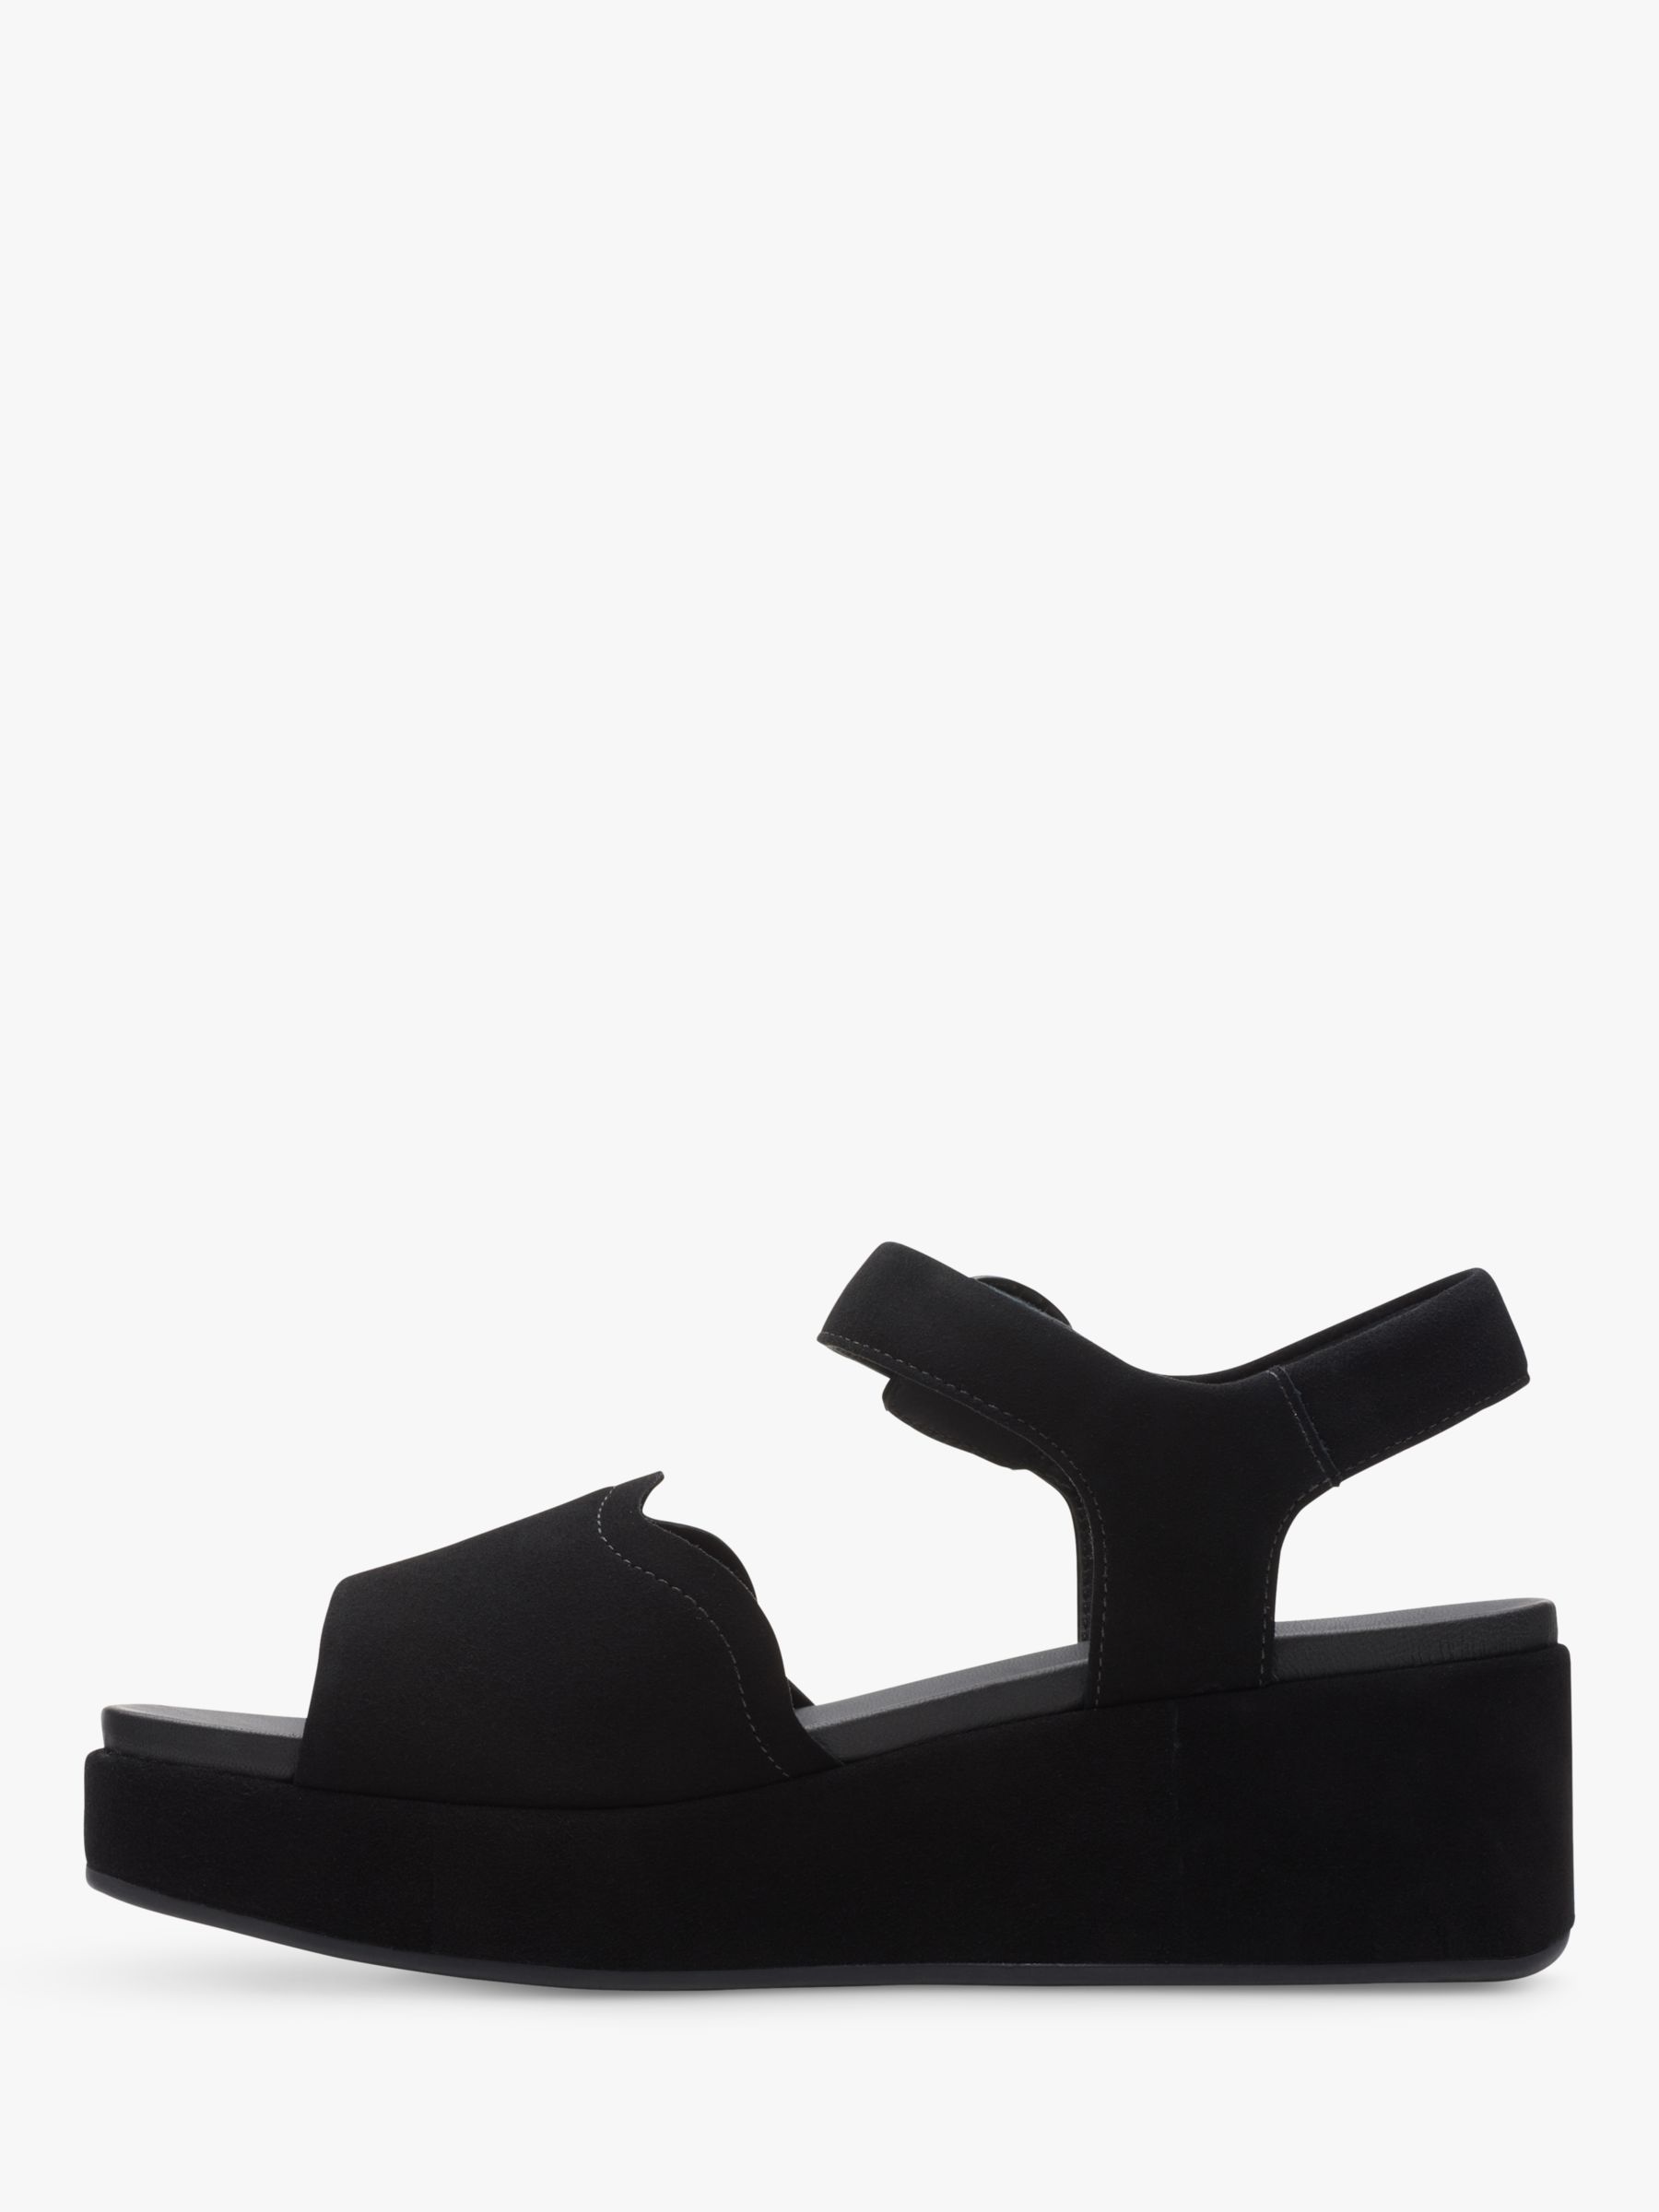 Clarks Kimmei Way Suede Wedge Sandals, Black at John Lewis & Partners